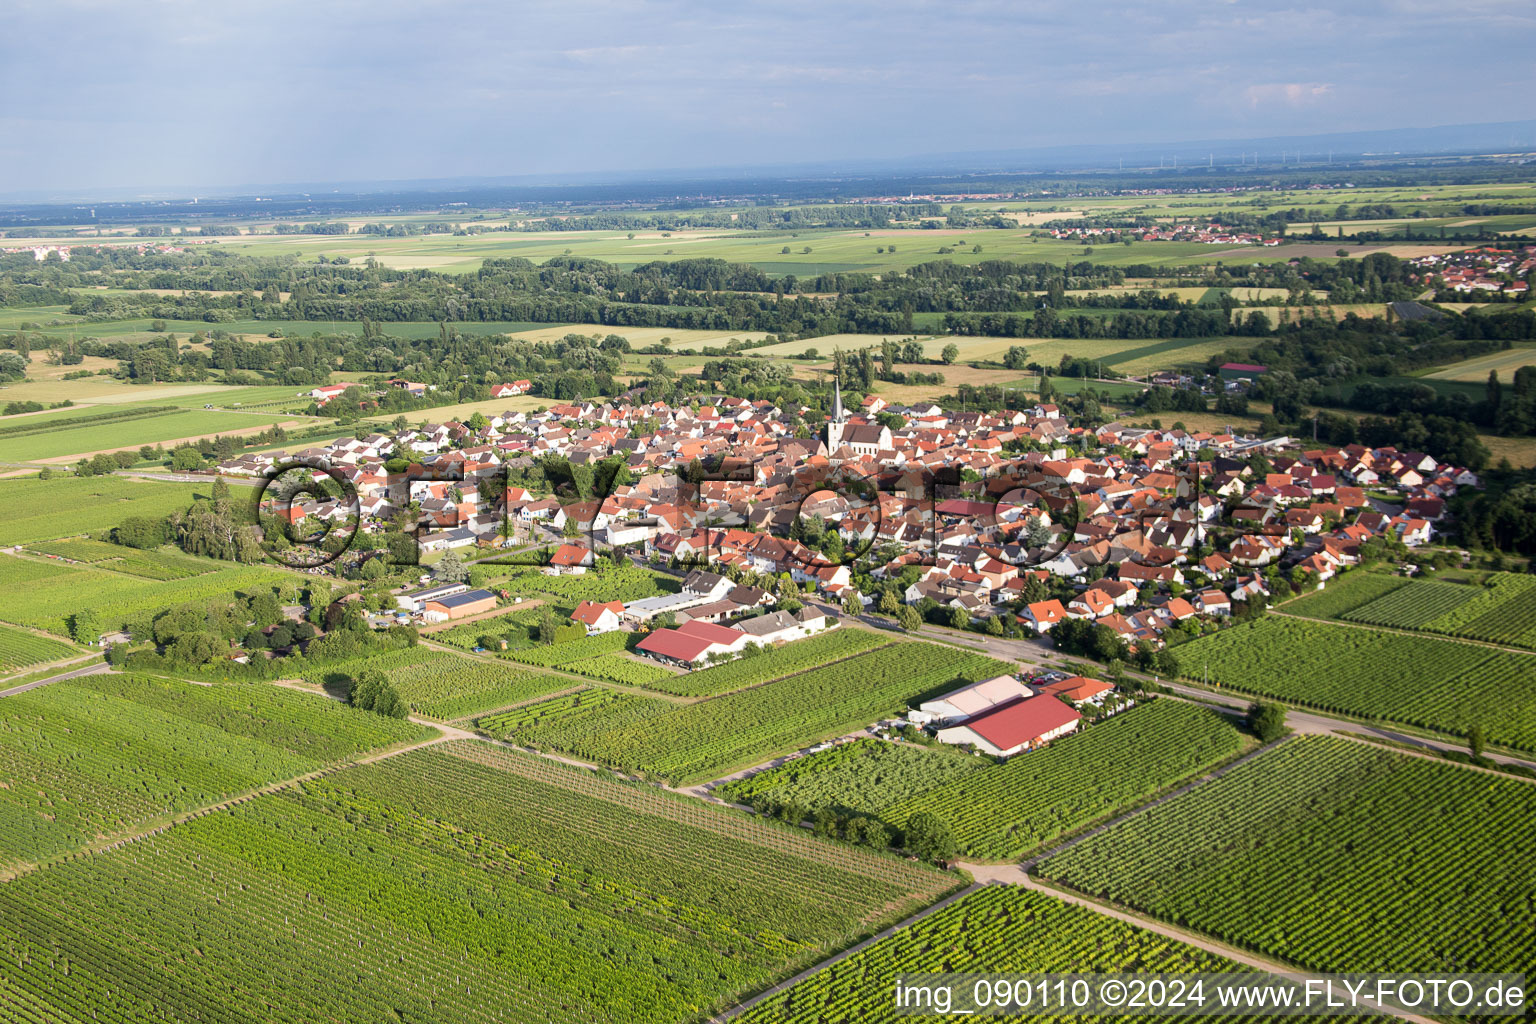 Bird's eye view of Venningen in the state Rhineland-Palatinate, Germany